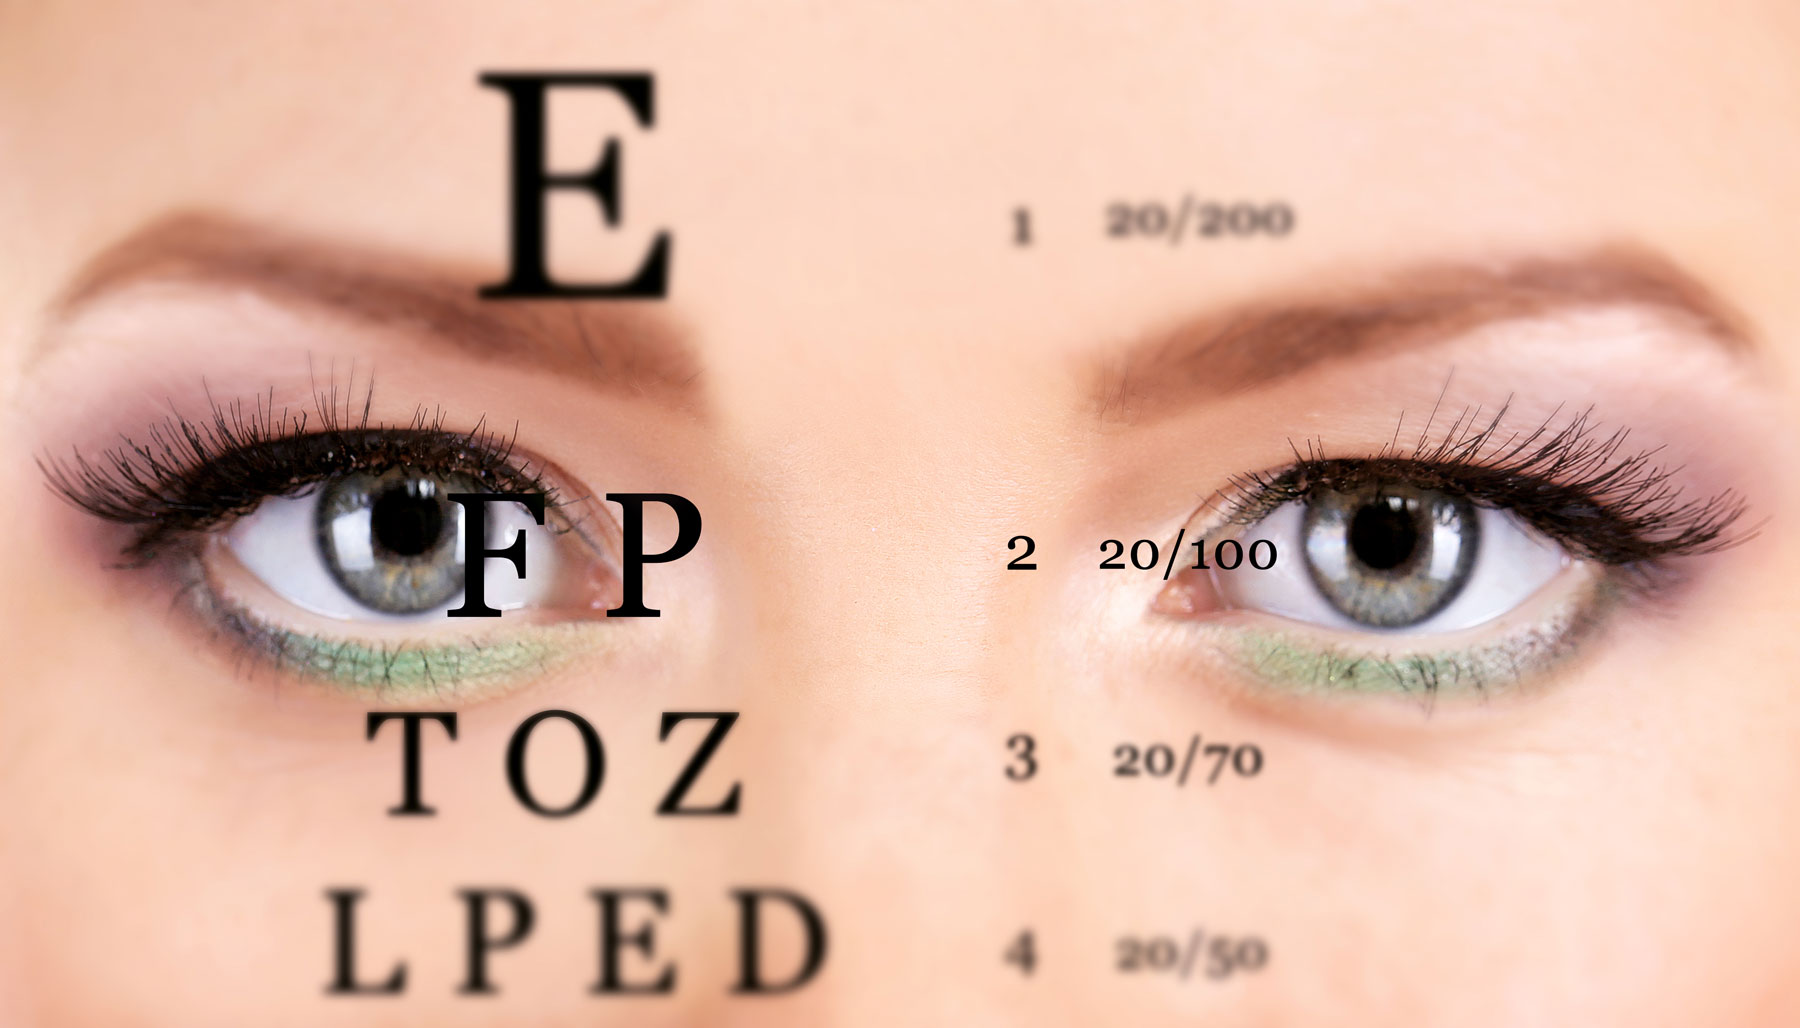 George Mayerle's Eye Test Chart – 20x200